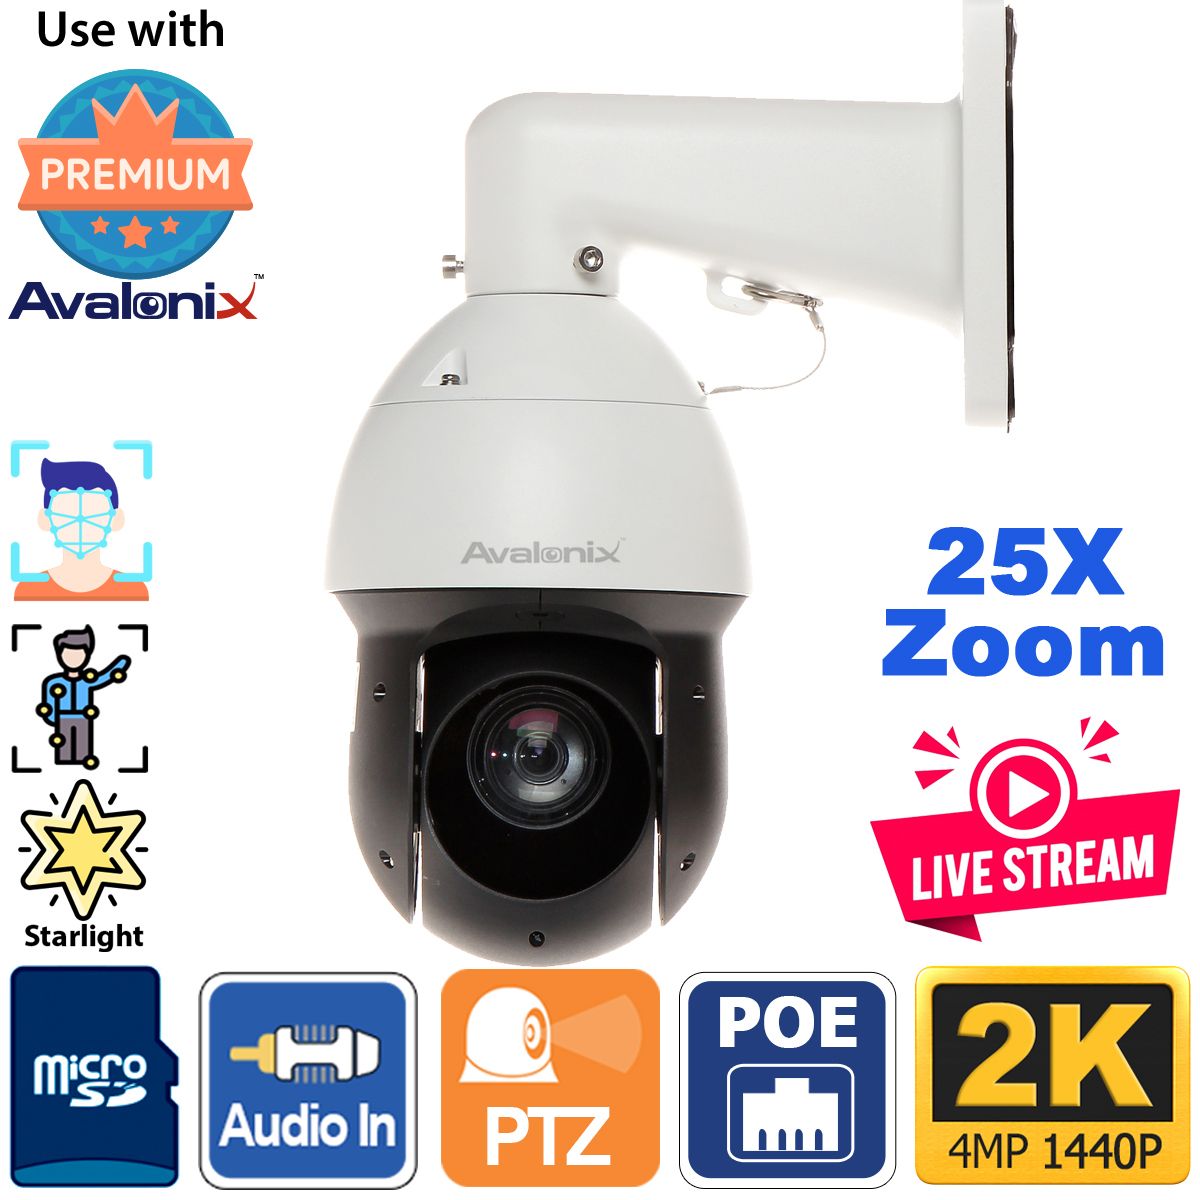 Security Camera Image Sensor Technology STARVIS™/ STARVIS 2